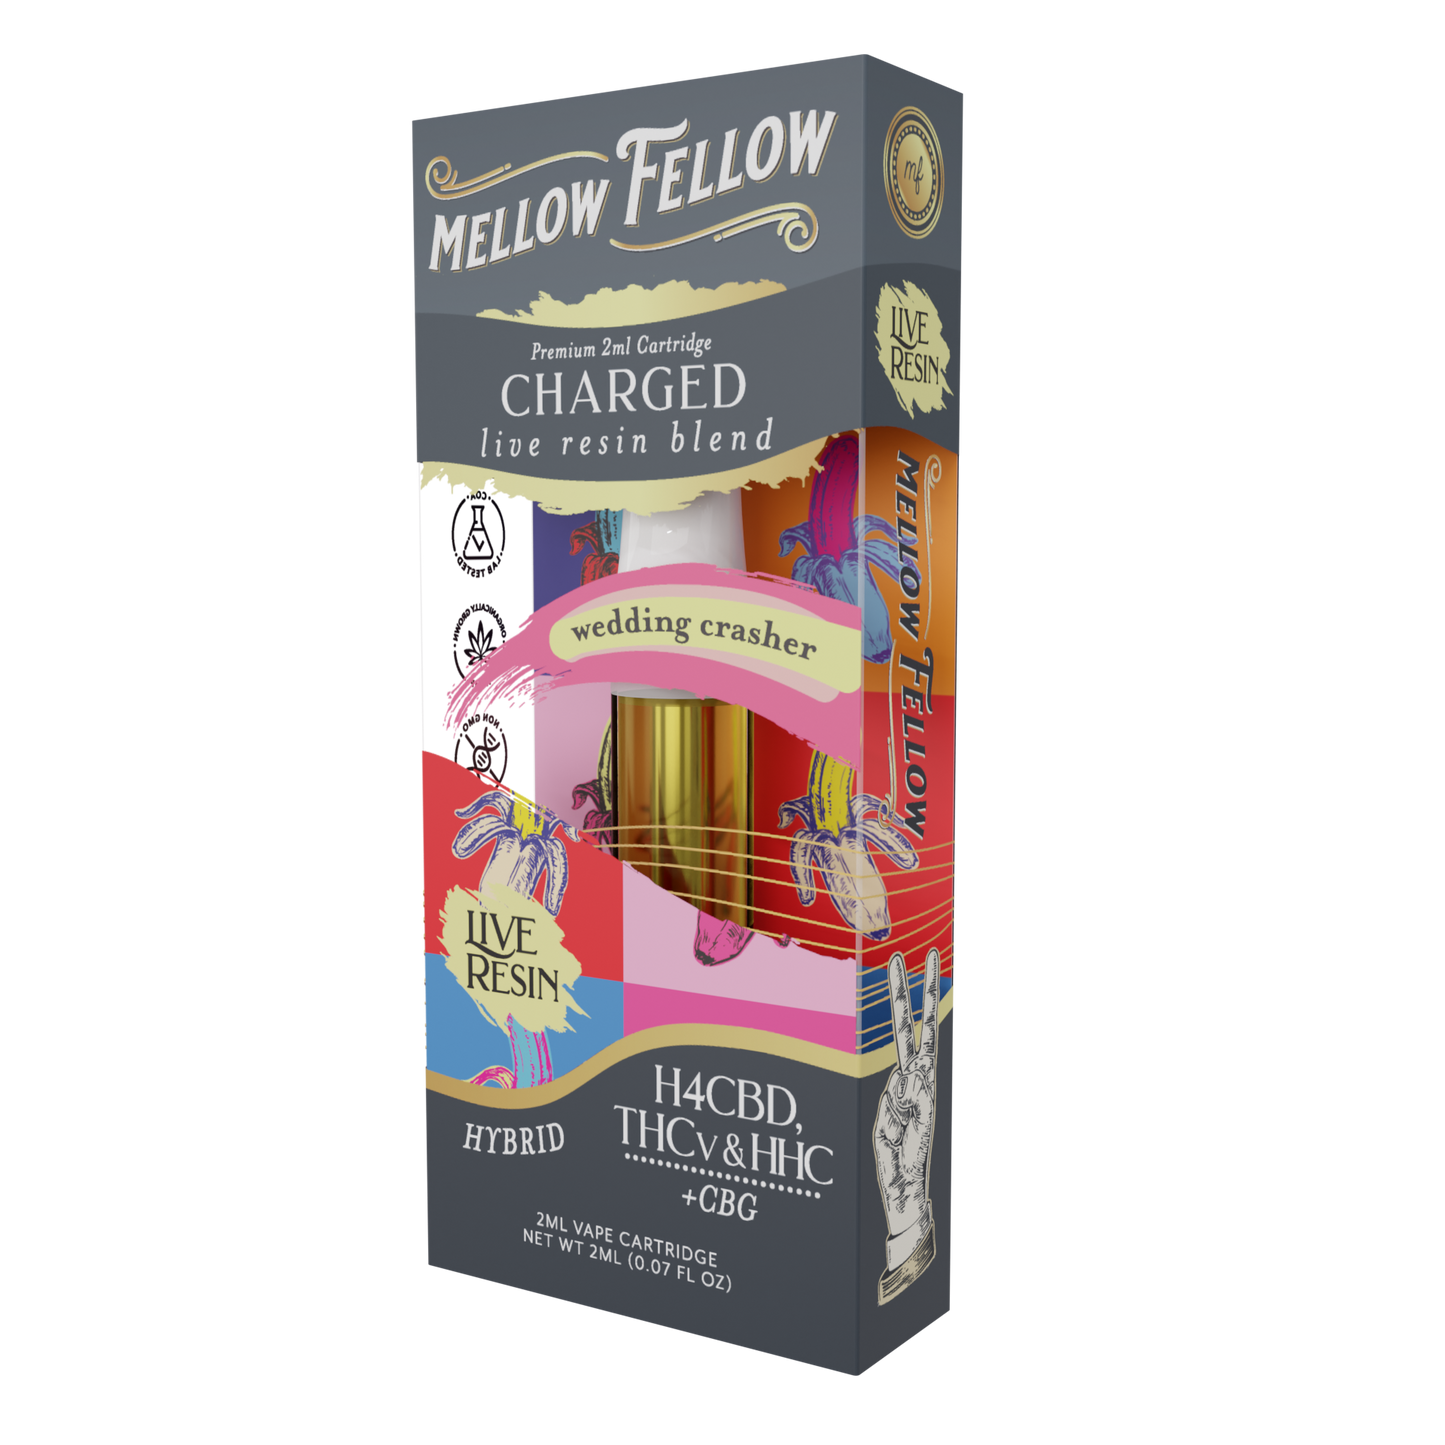 Mellow Fellow Charged Blend 2ml Live Resin Vape Cartridge Wedding Crasher Best Sales Price - Vape Cartridges